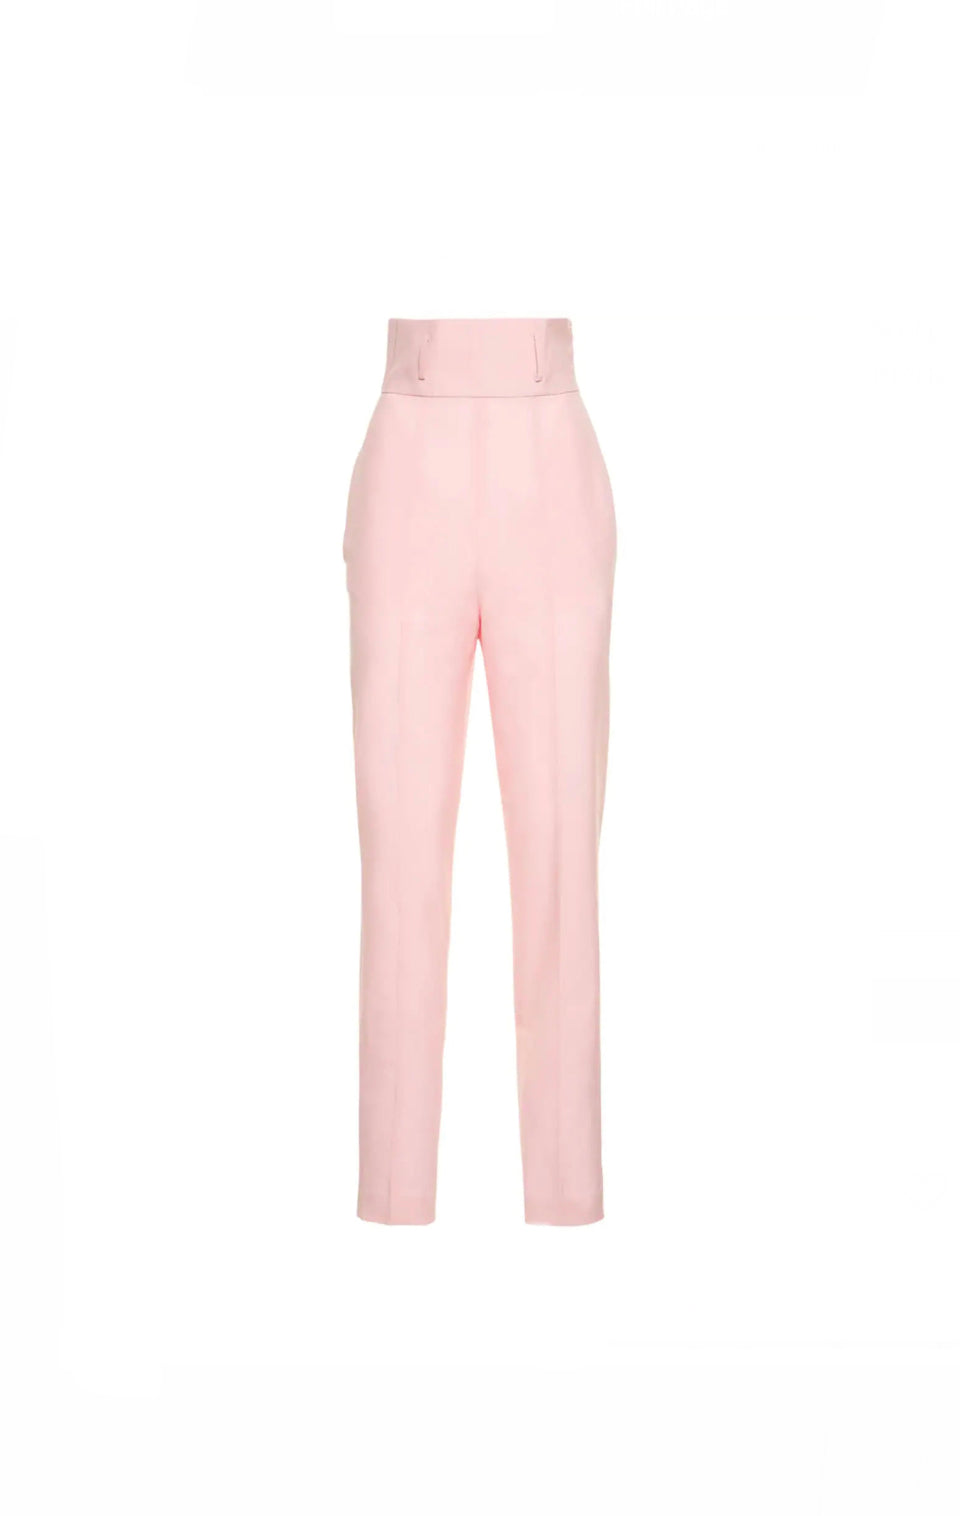 Nensi Dojaka Tailored High Waist Pink Trousers